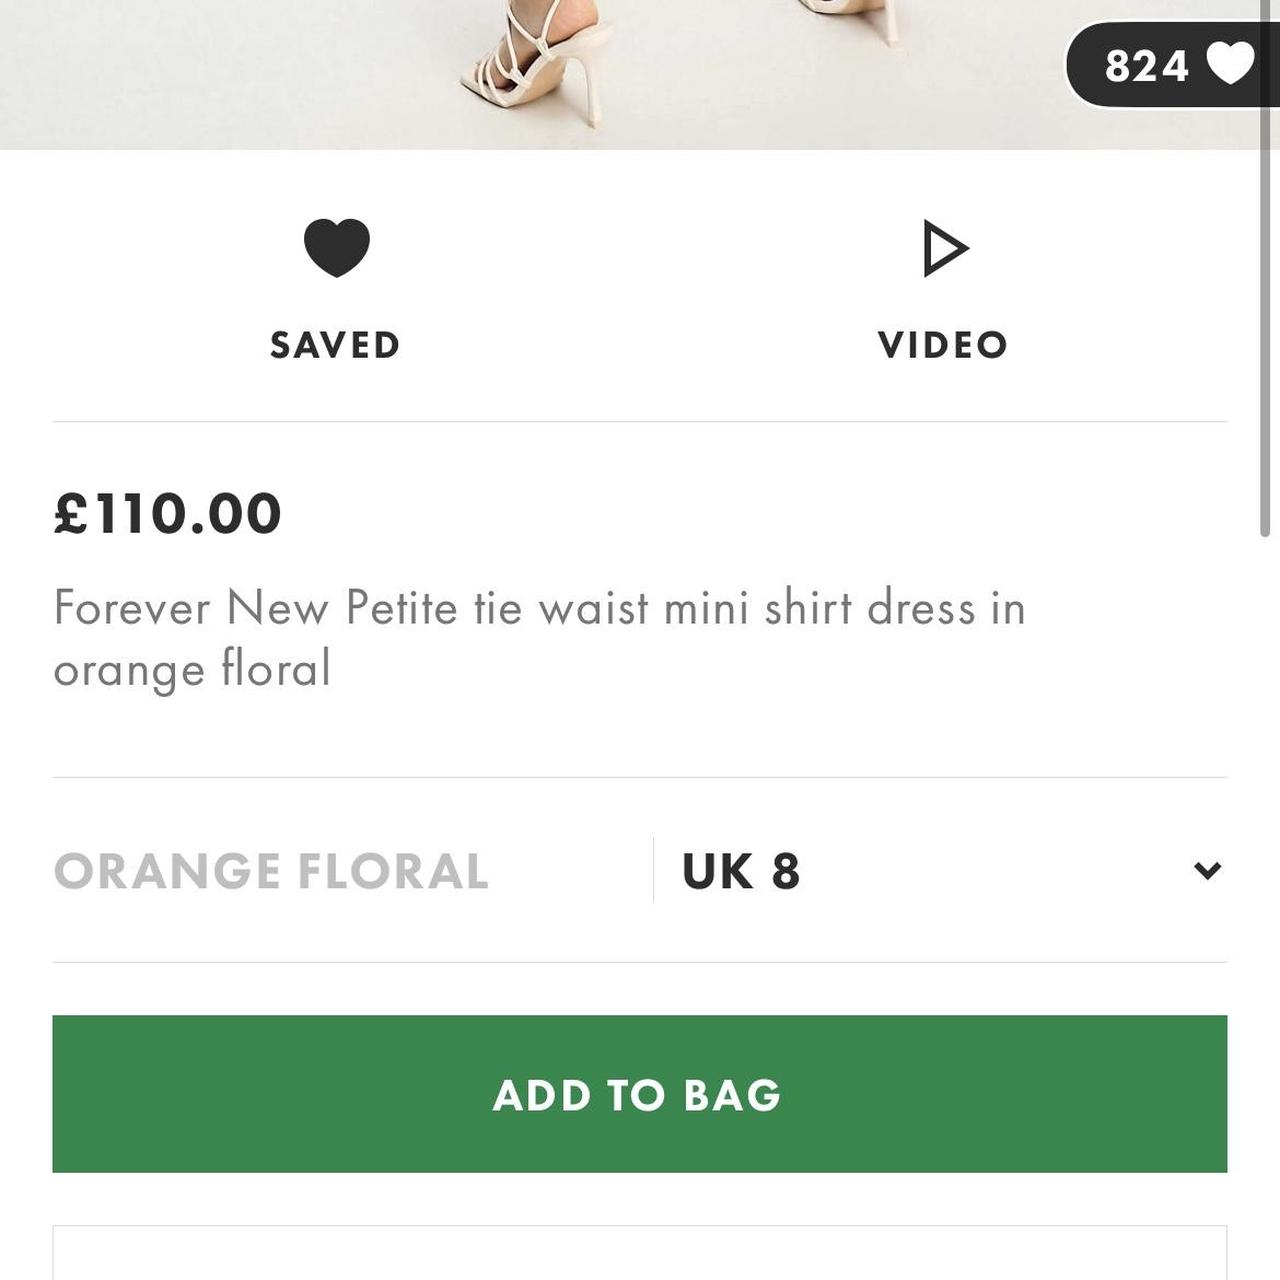 Forever New Petite tie waist mini shirt dress in orange floral